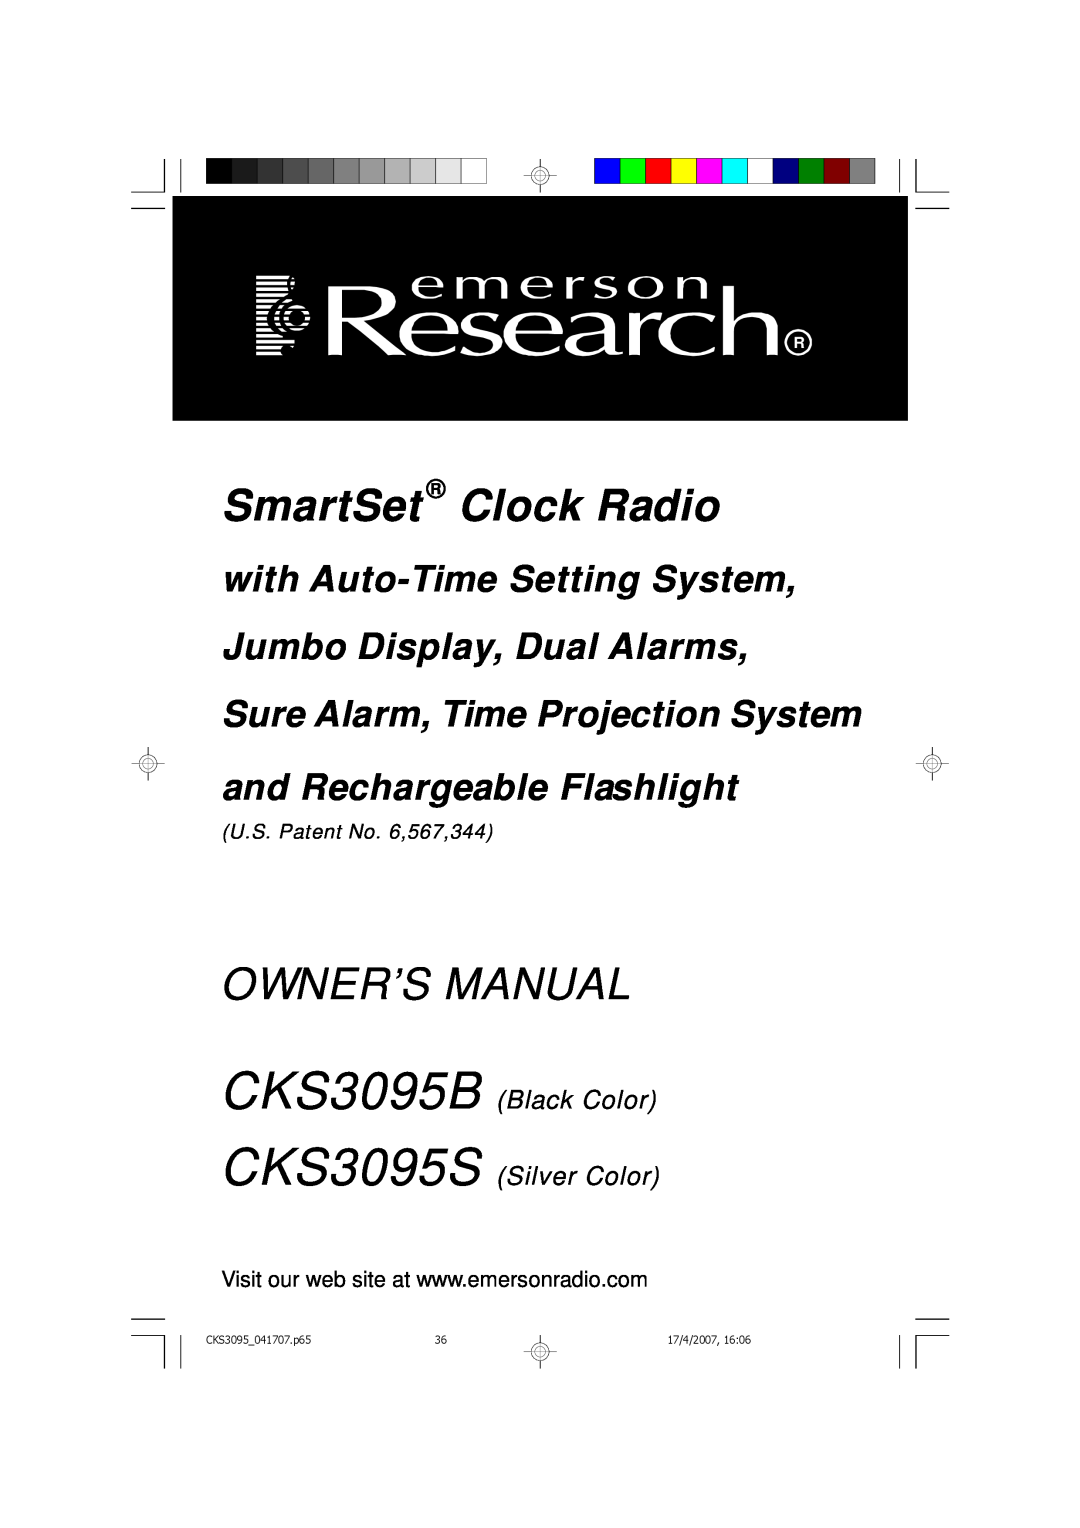 Emerson owner manual CKS3095B CKS3095S, SmartSet Clock Radio, Owner’S Manual, Black Color Silver Color, 17/4/2007 